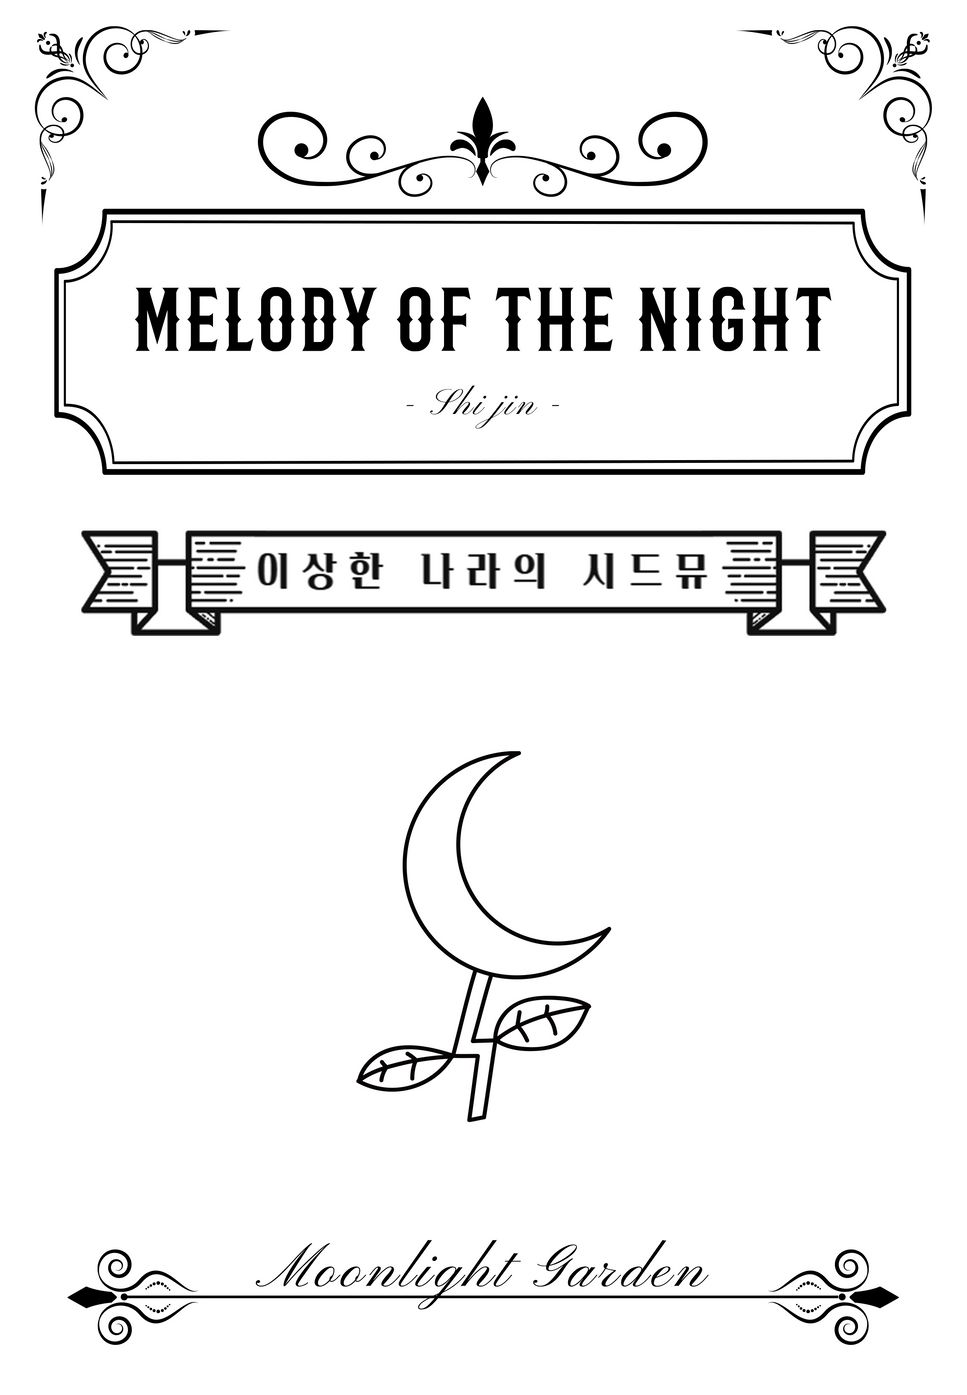 Shi Jin - Melody of the Night (밤의 피아노곡) by Moonlight garden